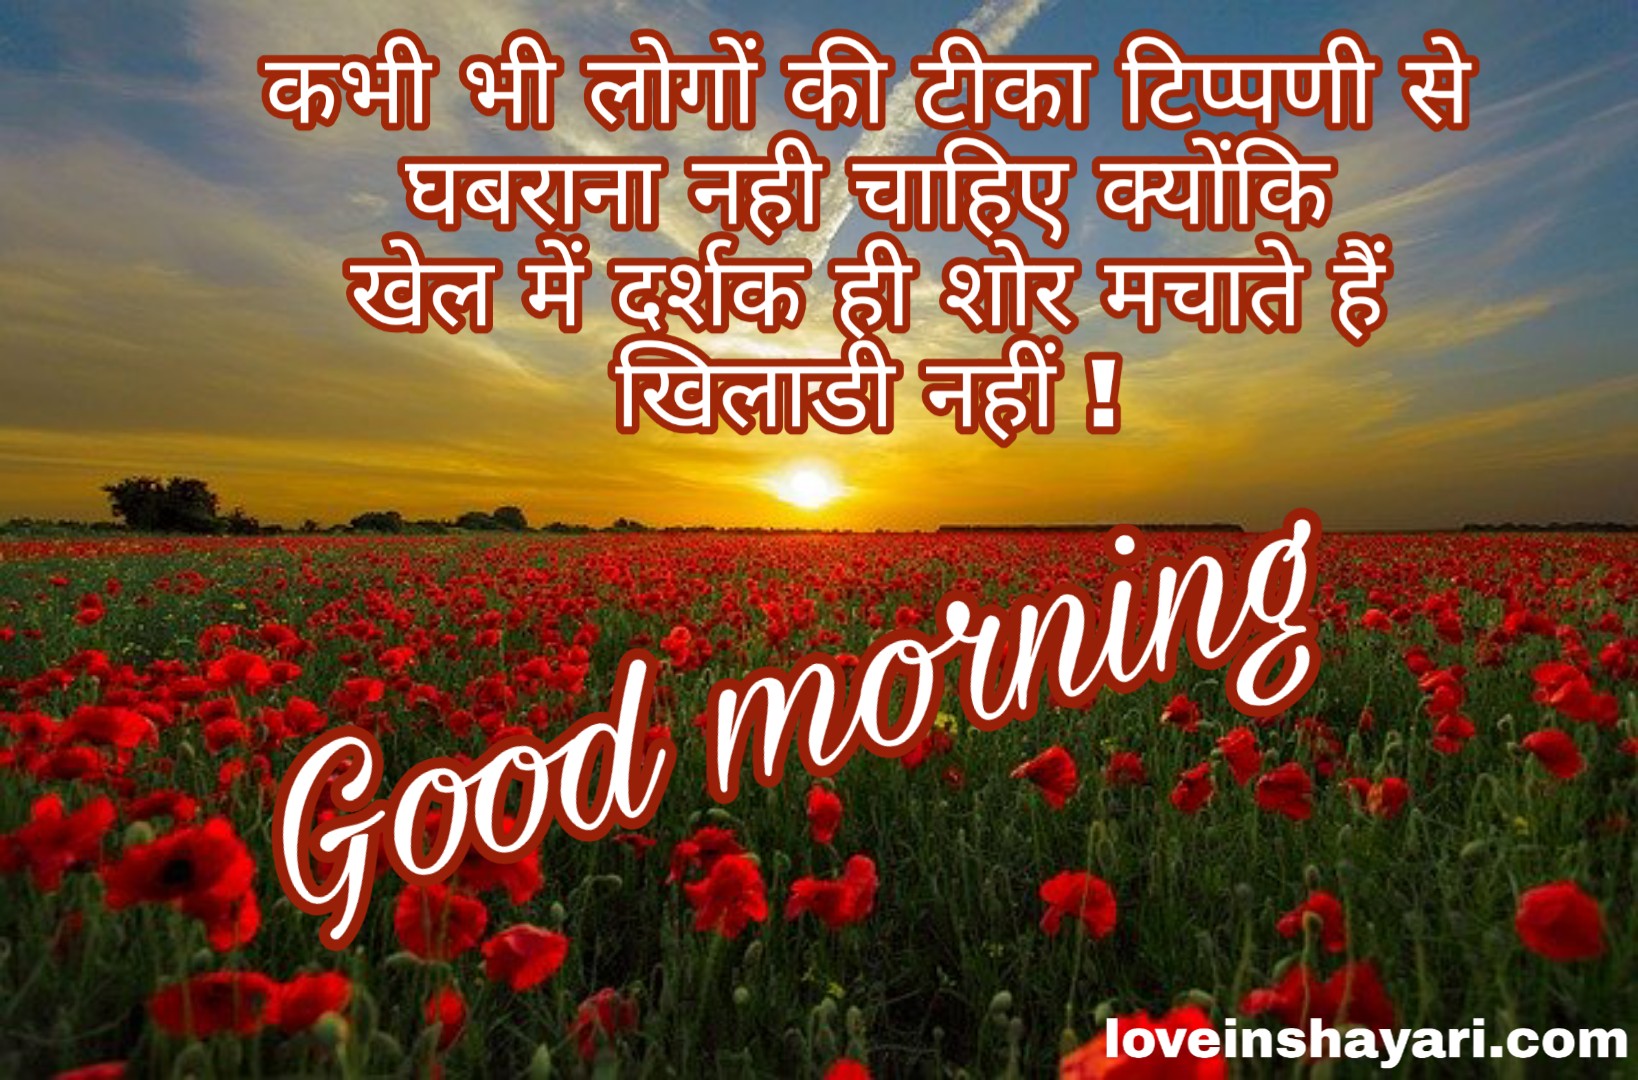 Good morning whatsapp status in hindi 2021 » Love In Shayari